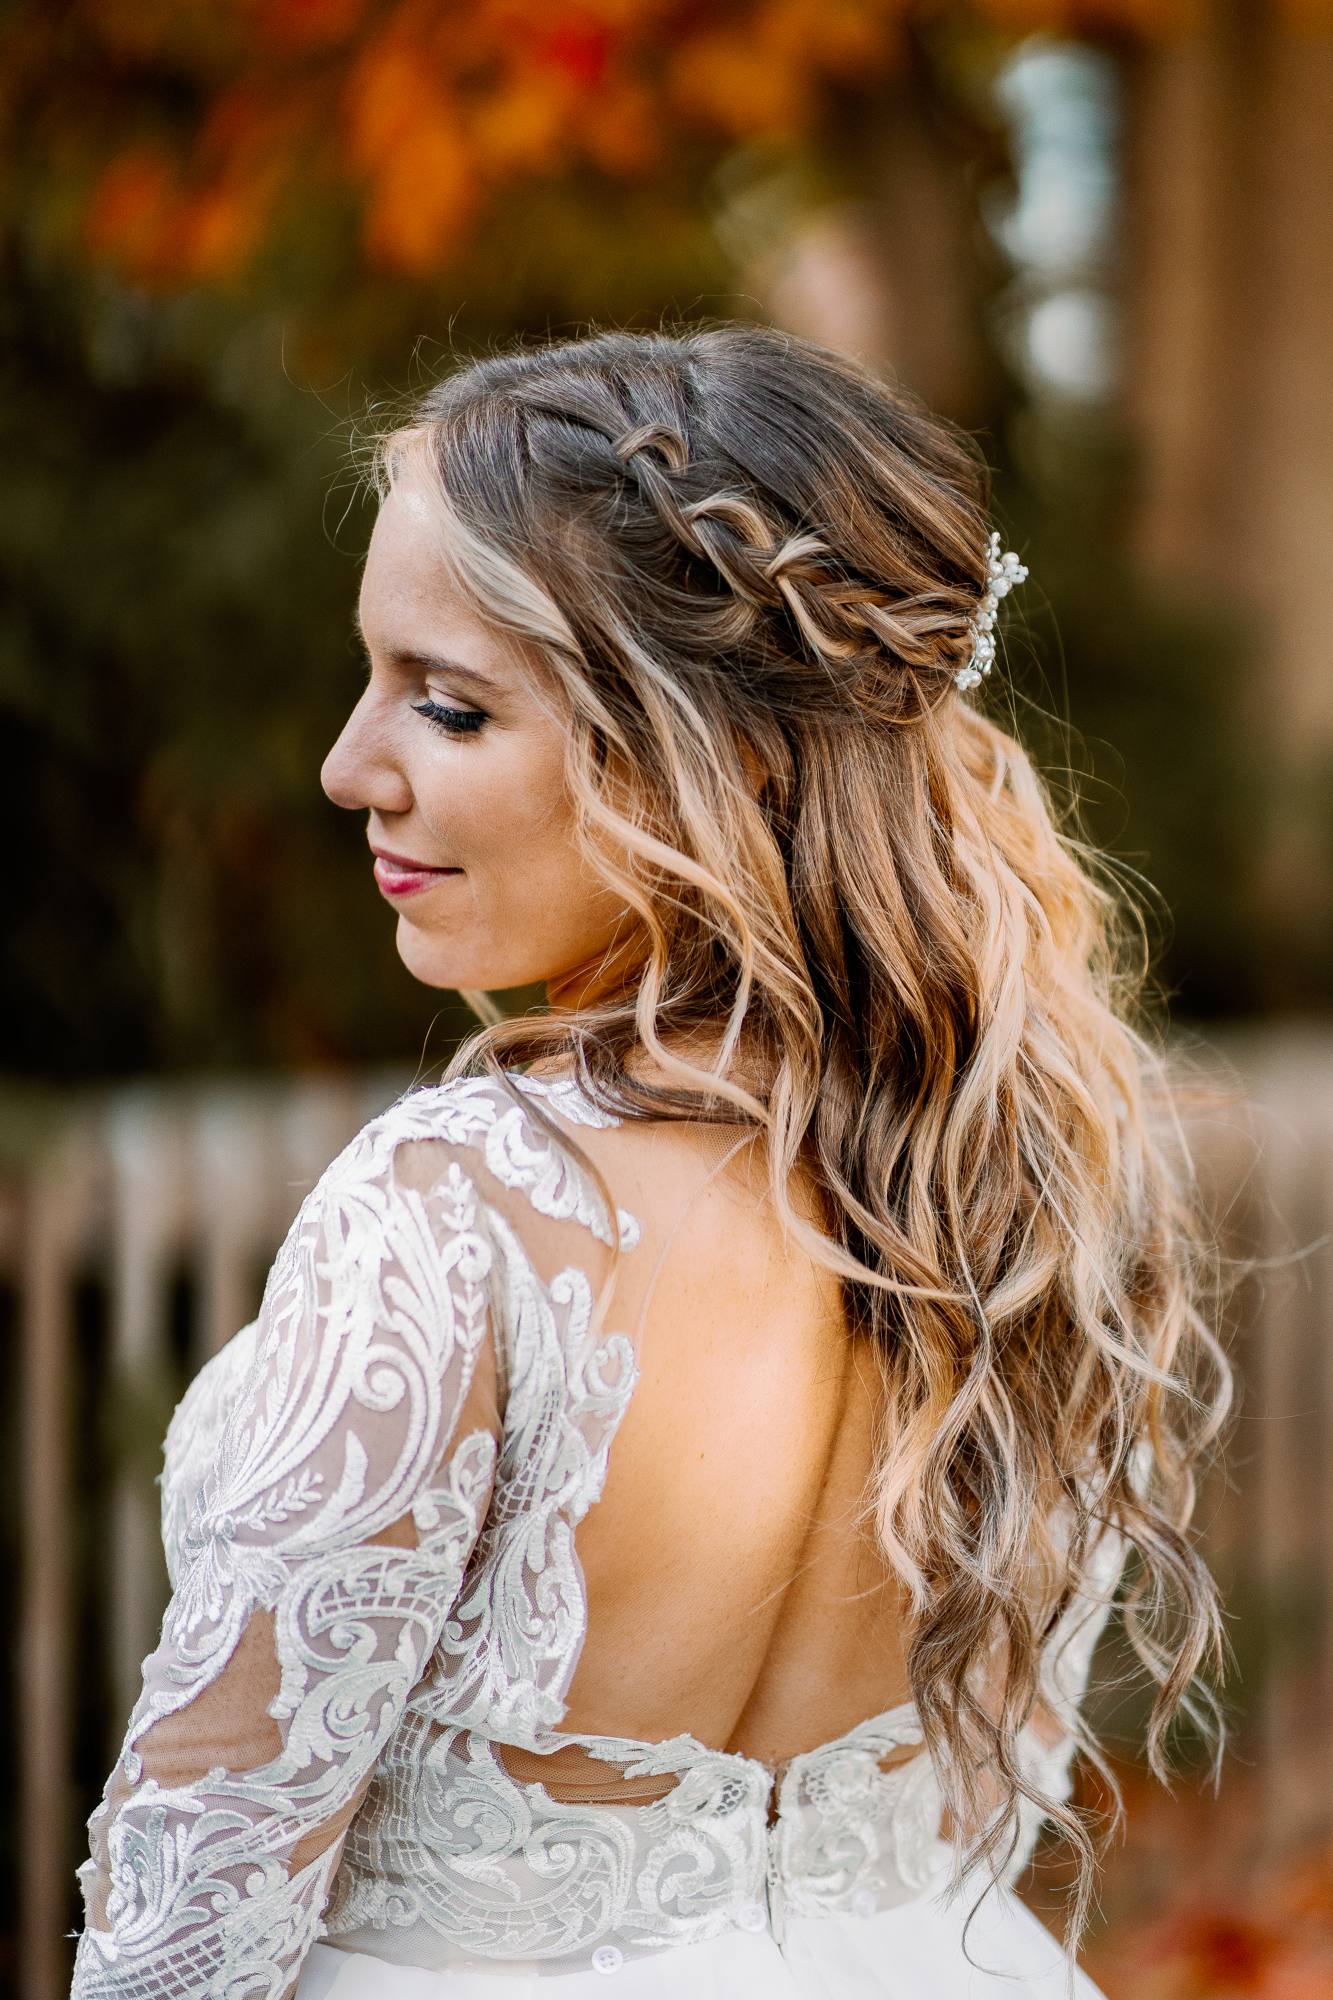 Bridal hair ideas for fall upstate NY wedding